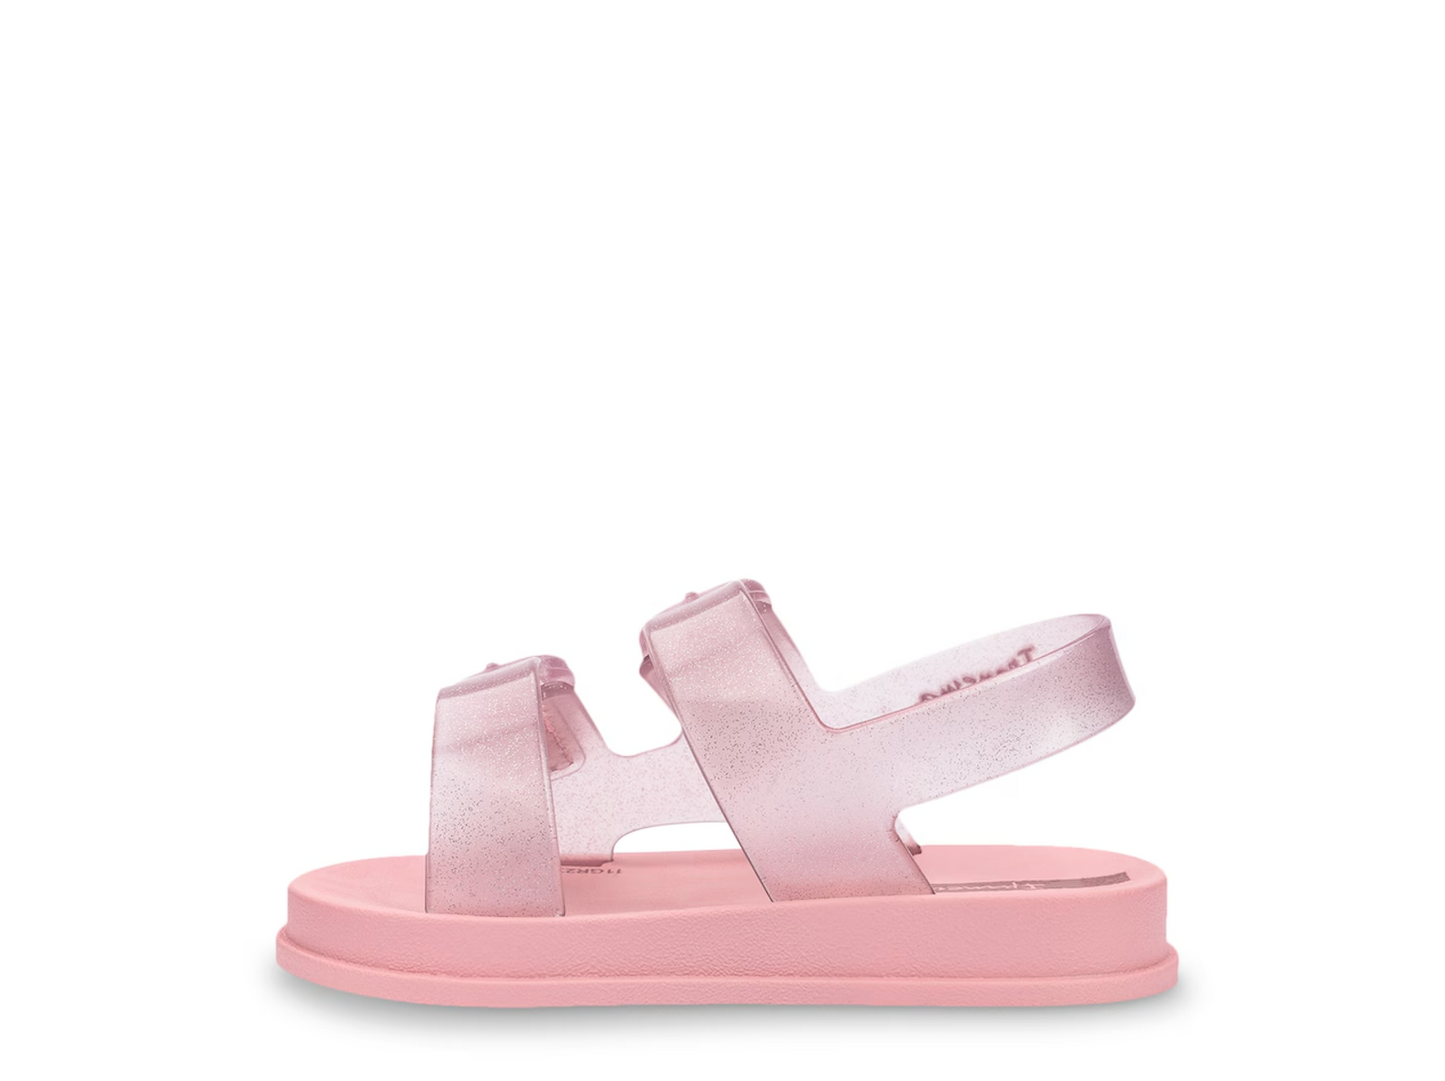 Follow Sandal | Pink Glitter